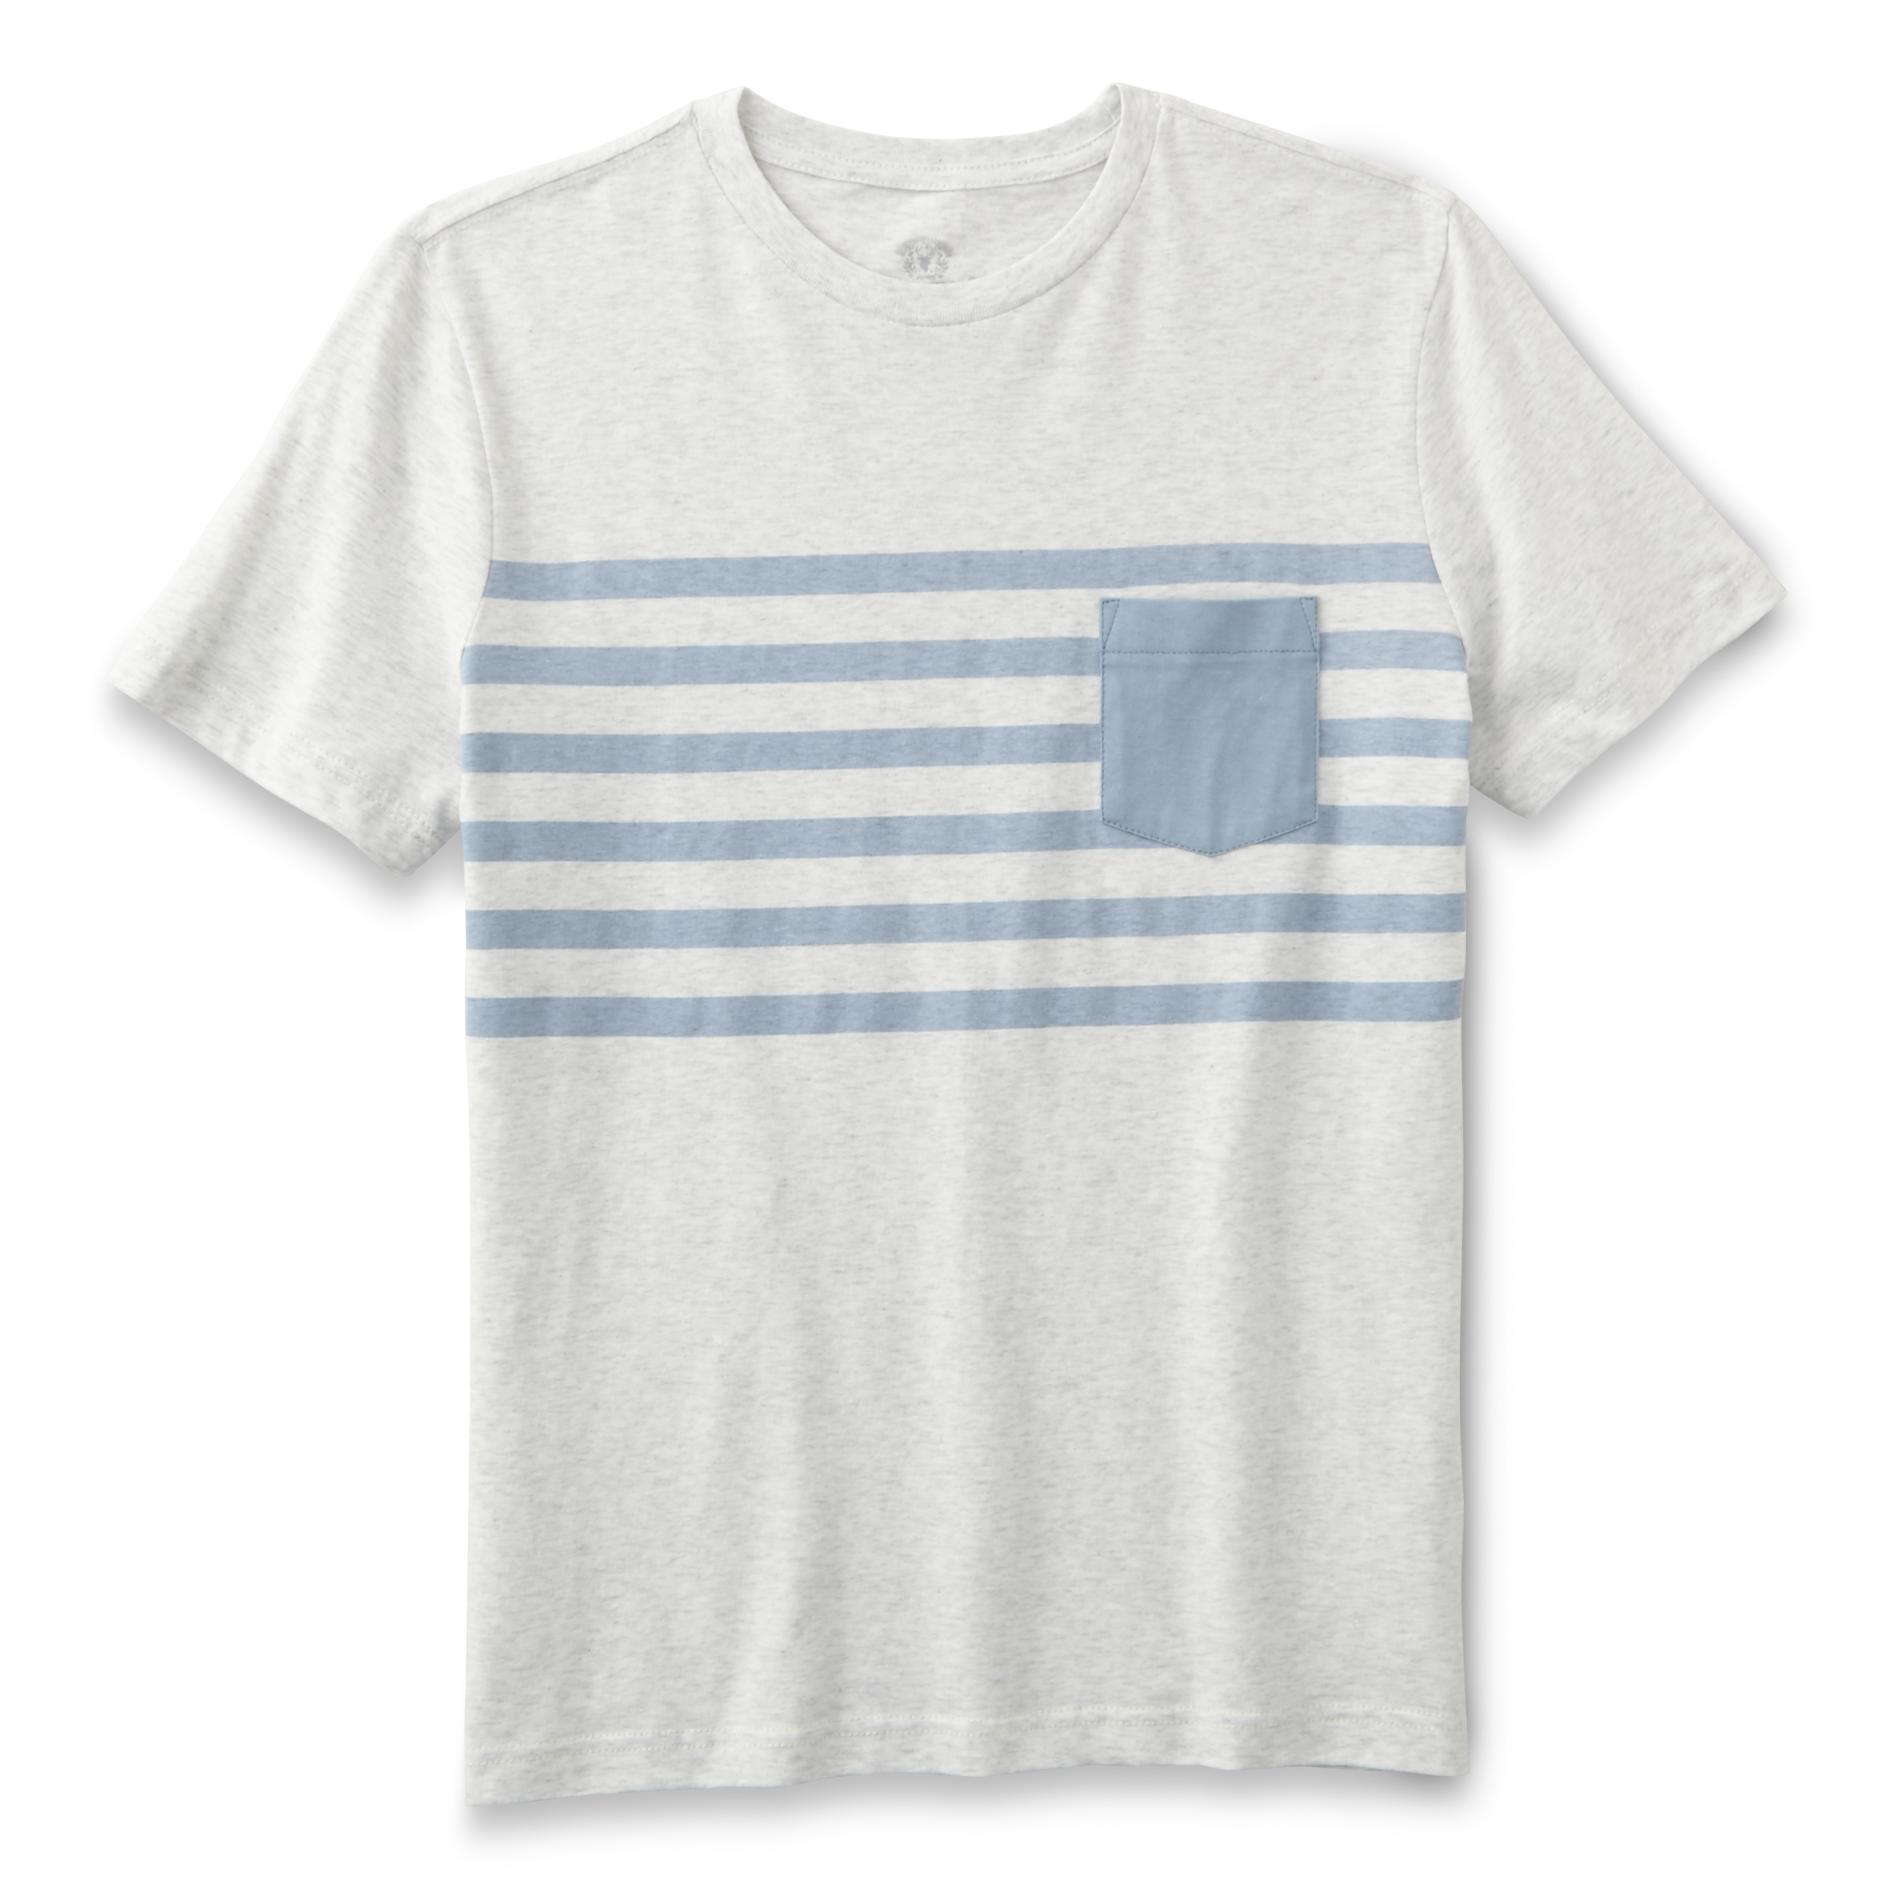 Roebuck & Co. Young Men's Pocket T-Shirt - Striped